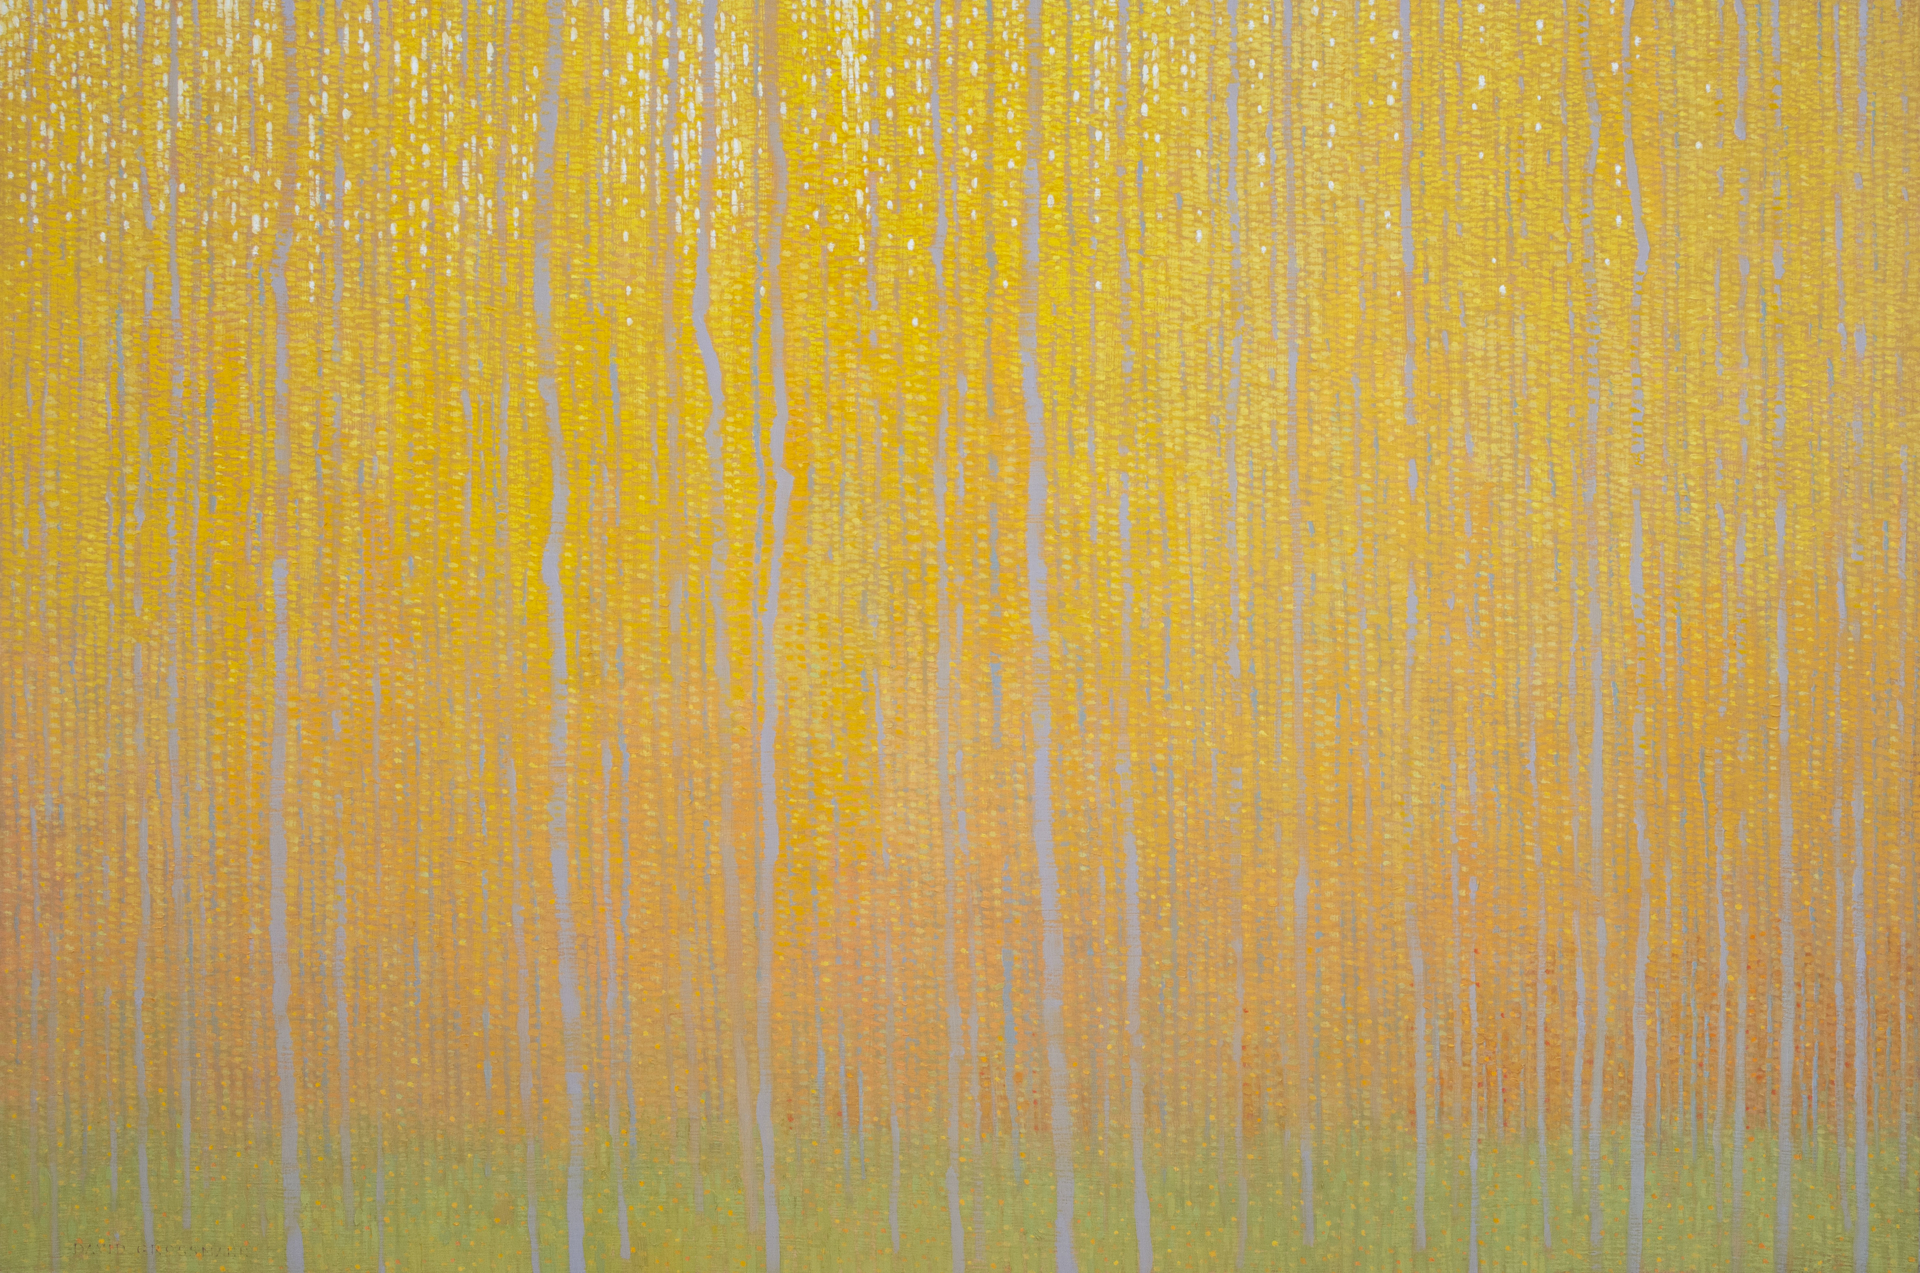 Bright Autumn Patterns by David Grossmann